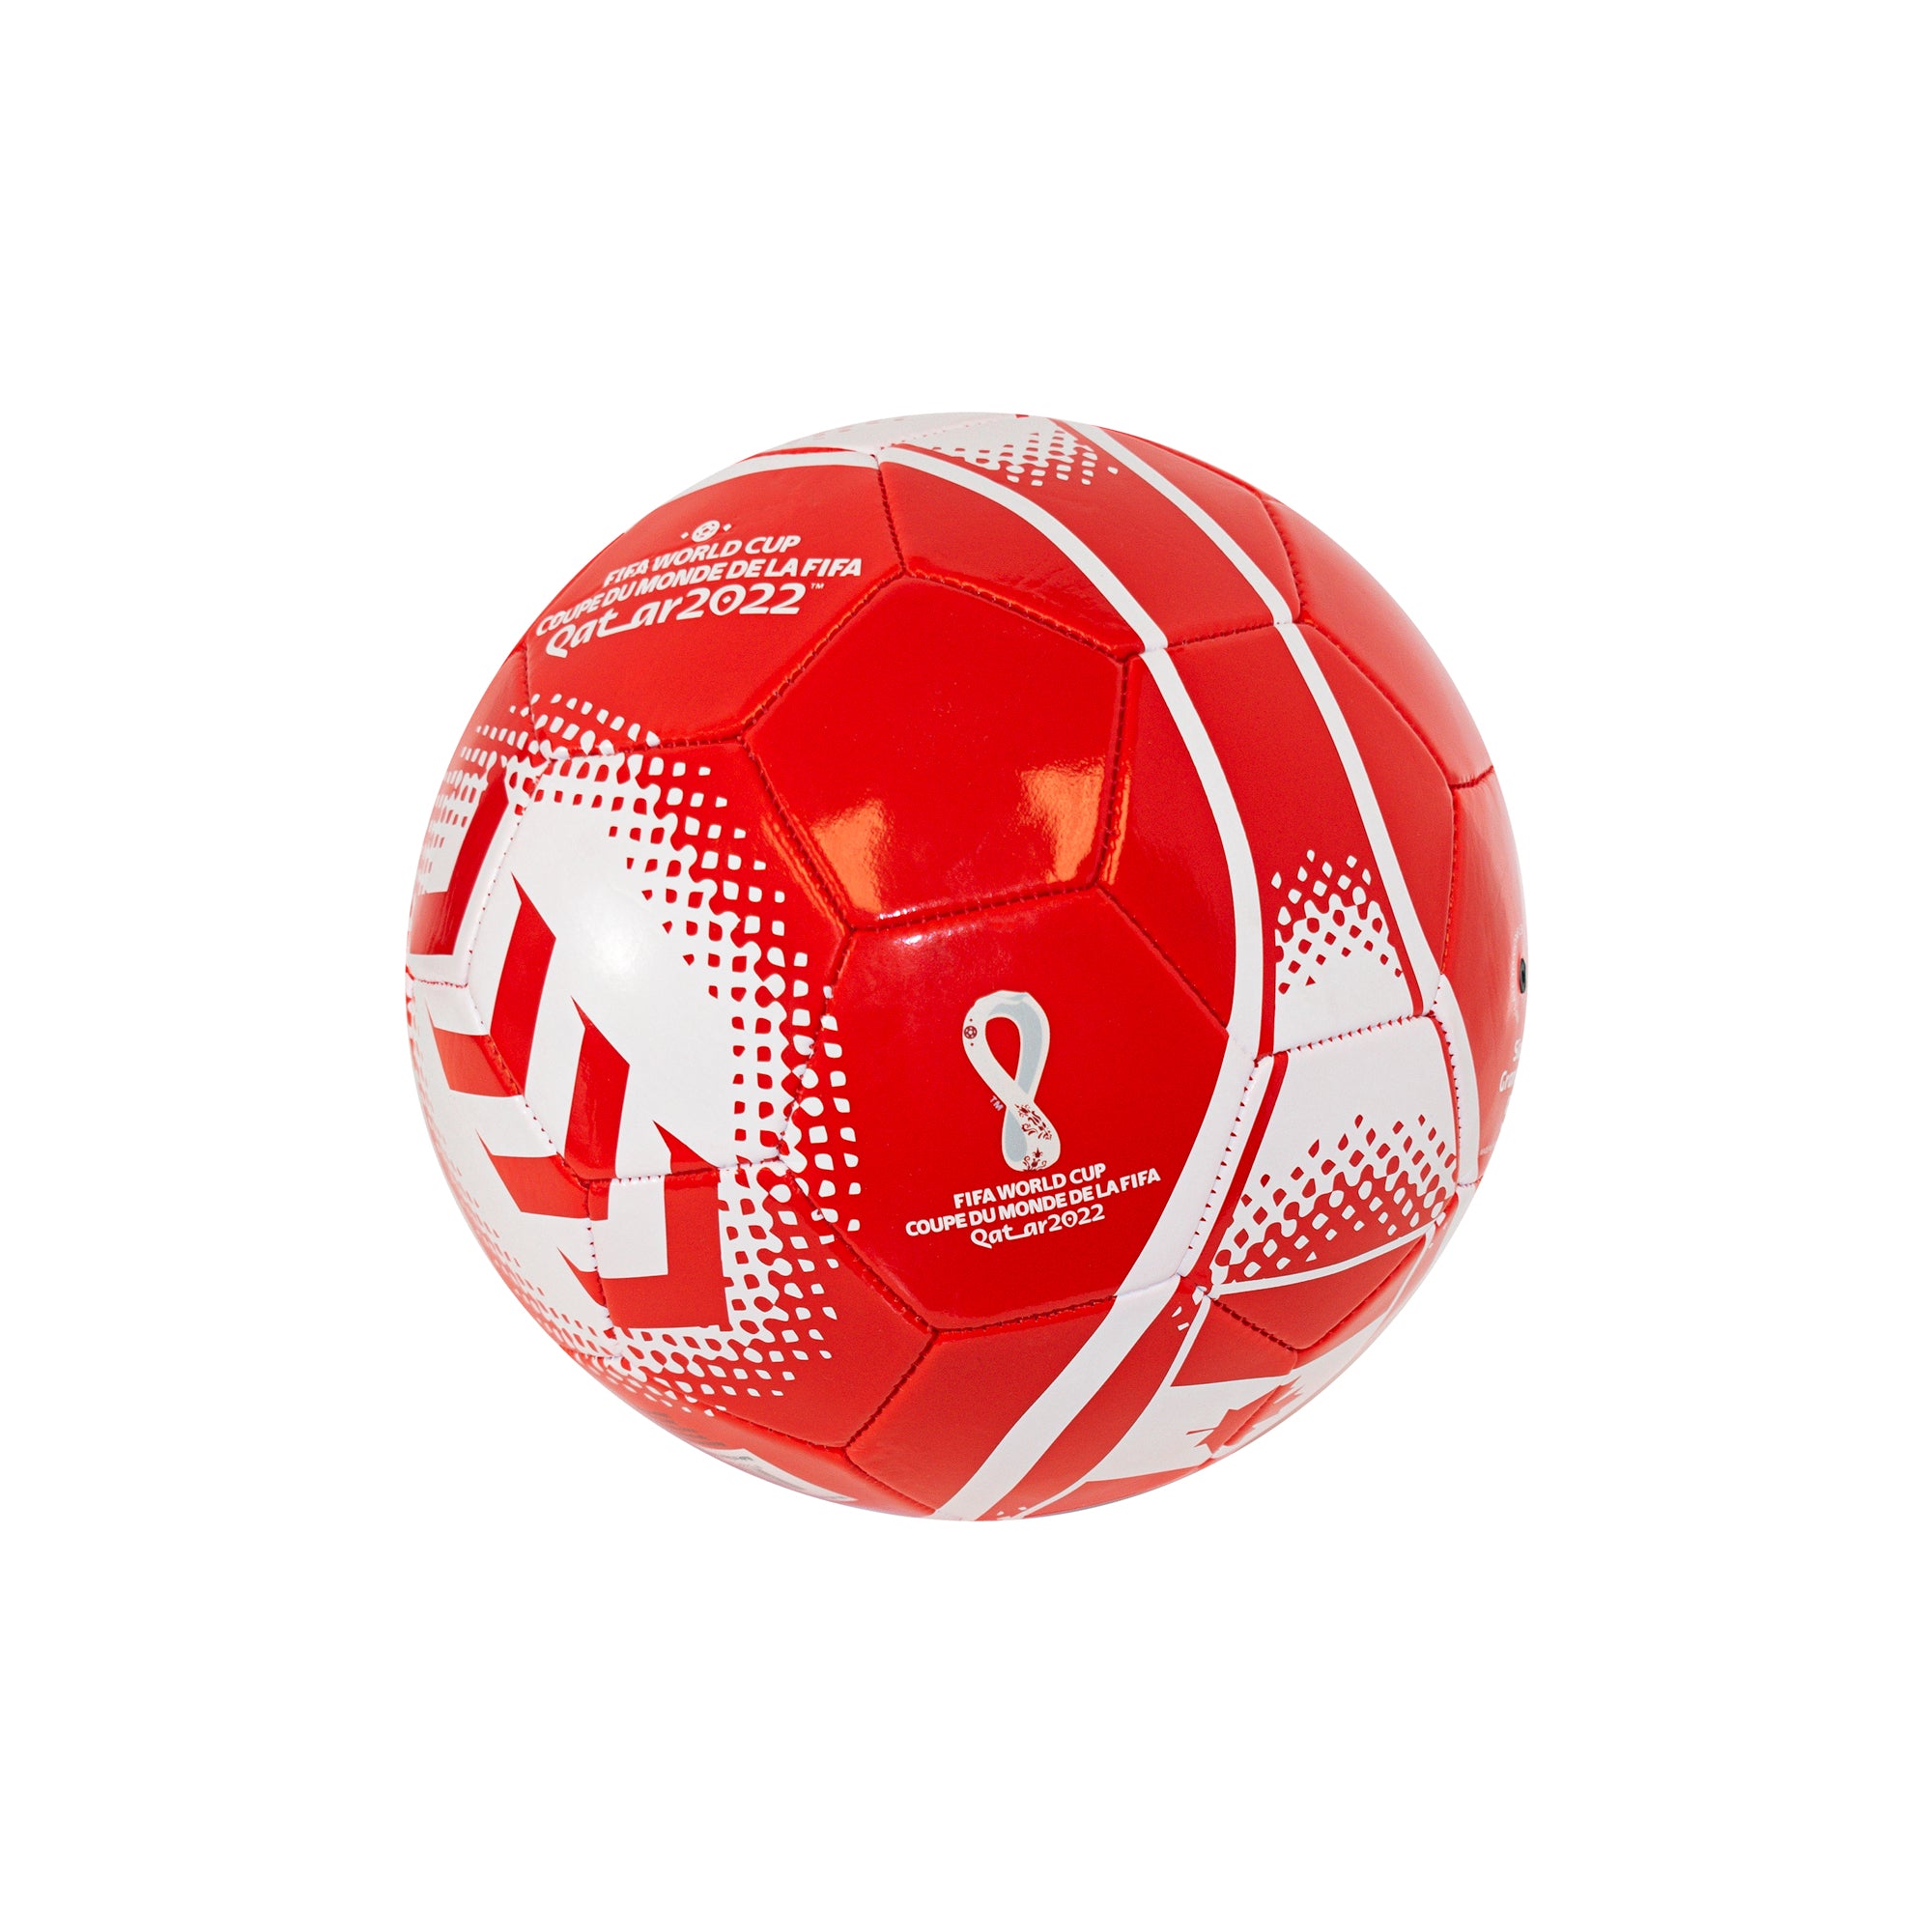 canada-soccerball-wc-image-1.jpg